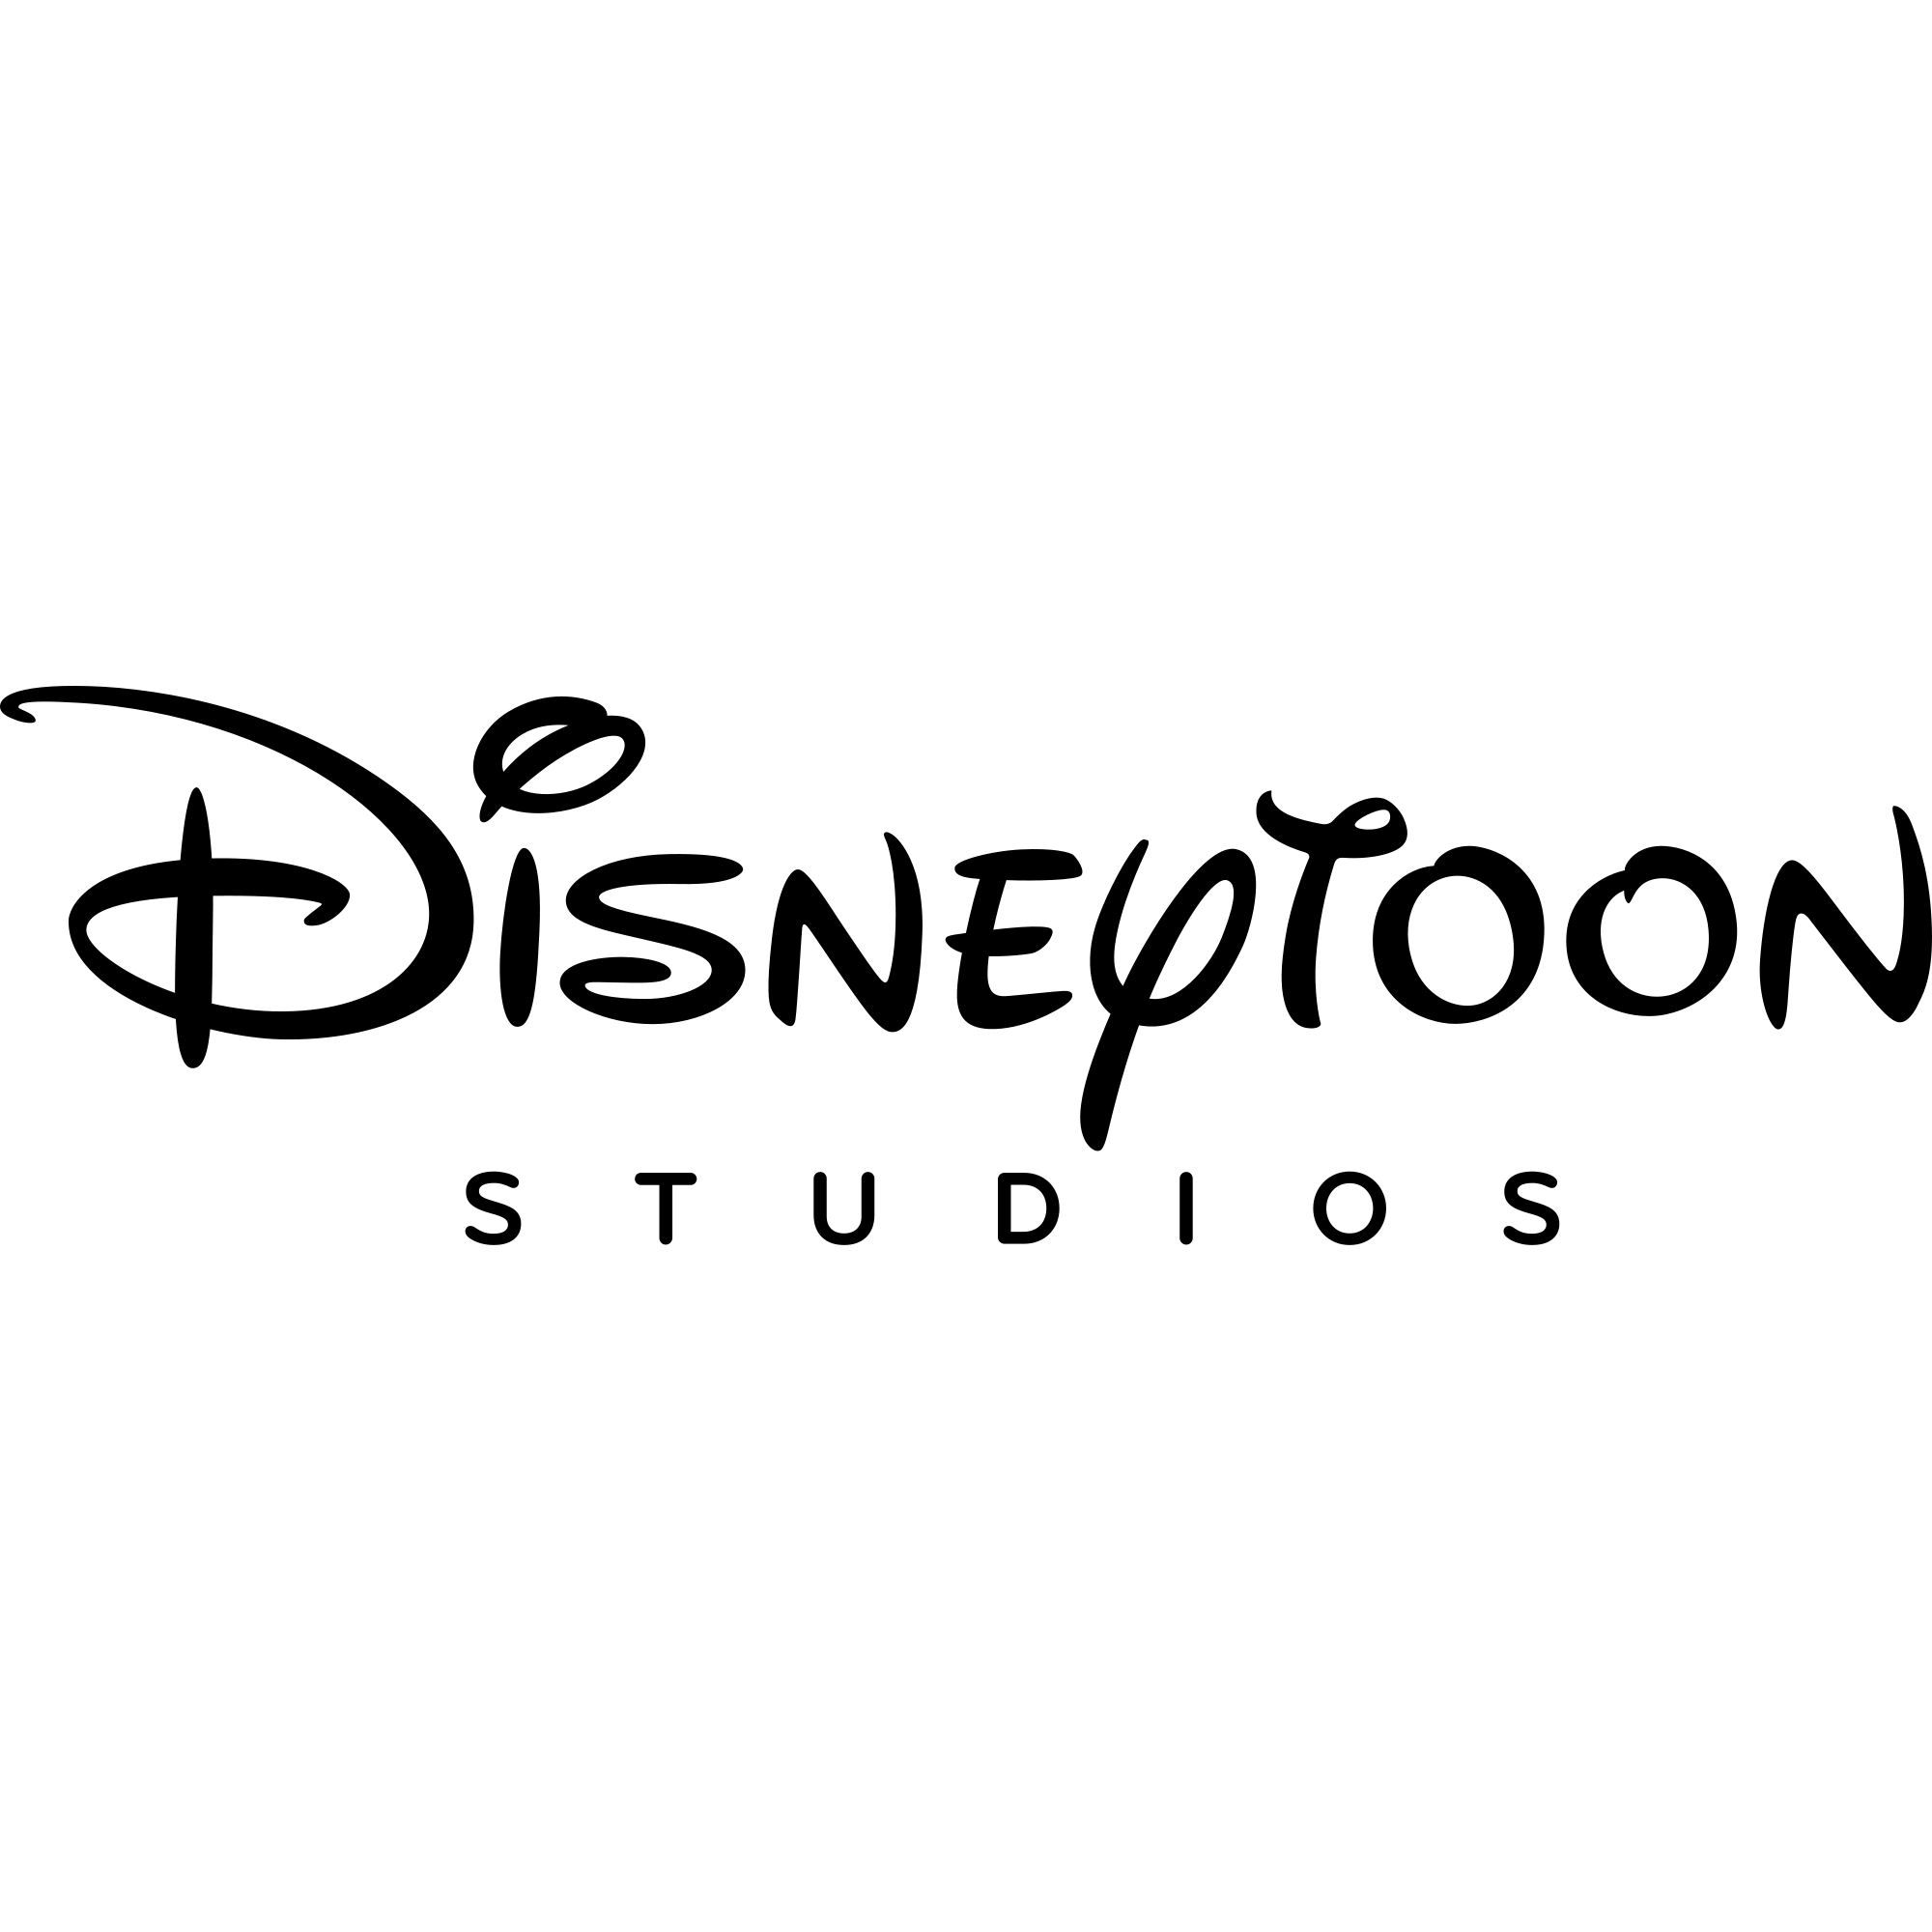 disneytoon #studios #logos #cartoons #toons #disney #animation #movies #company #disneytoonstudios